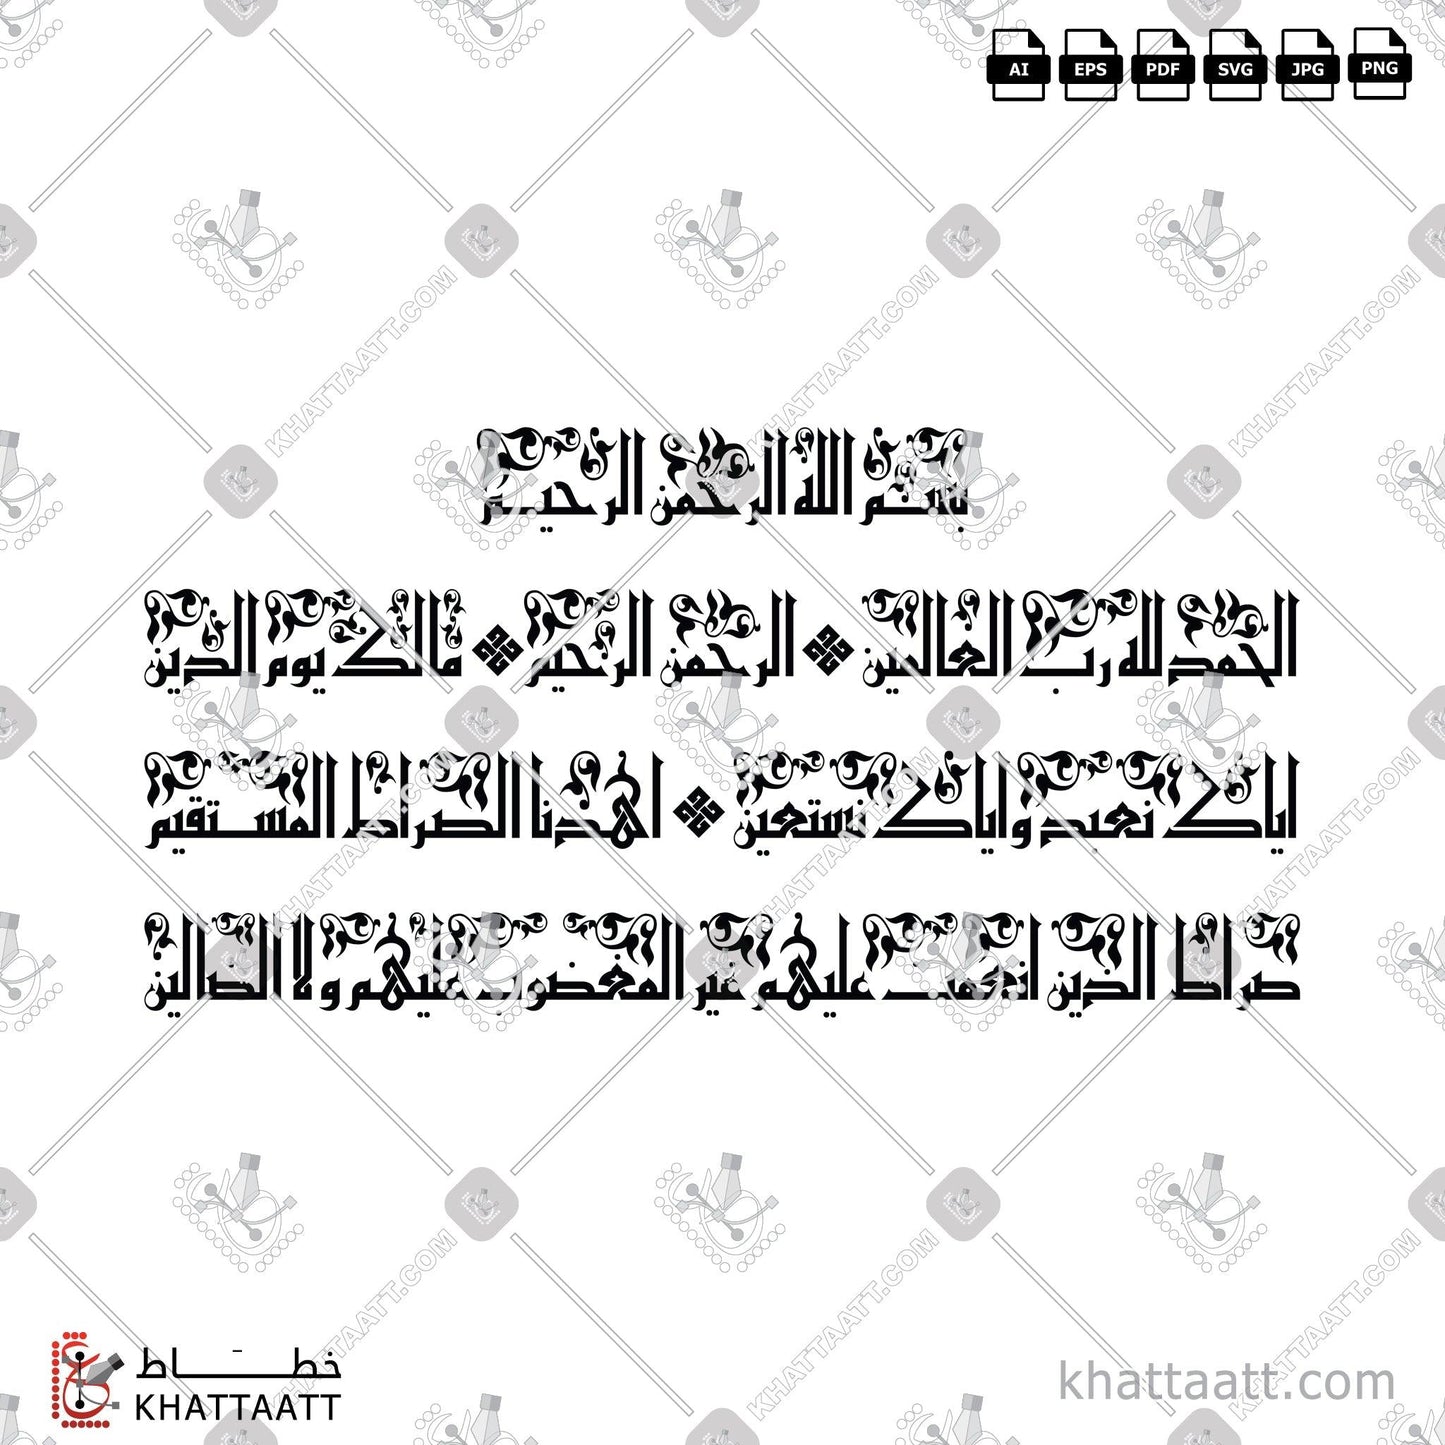 Download Arabic Calligraphy of Surat Al-Fatiha - سورة الفاتحة in Kufi - الخط الكوفي in vector and .png